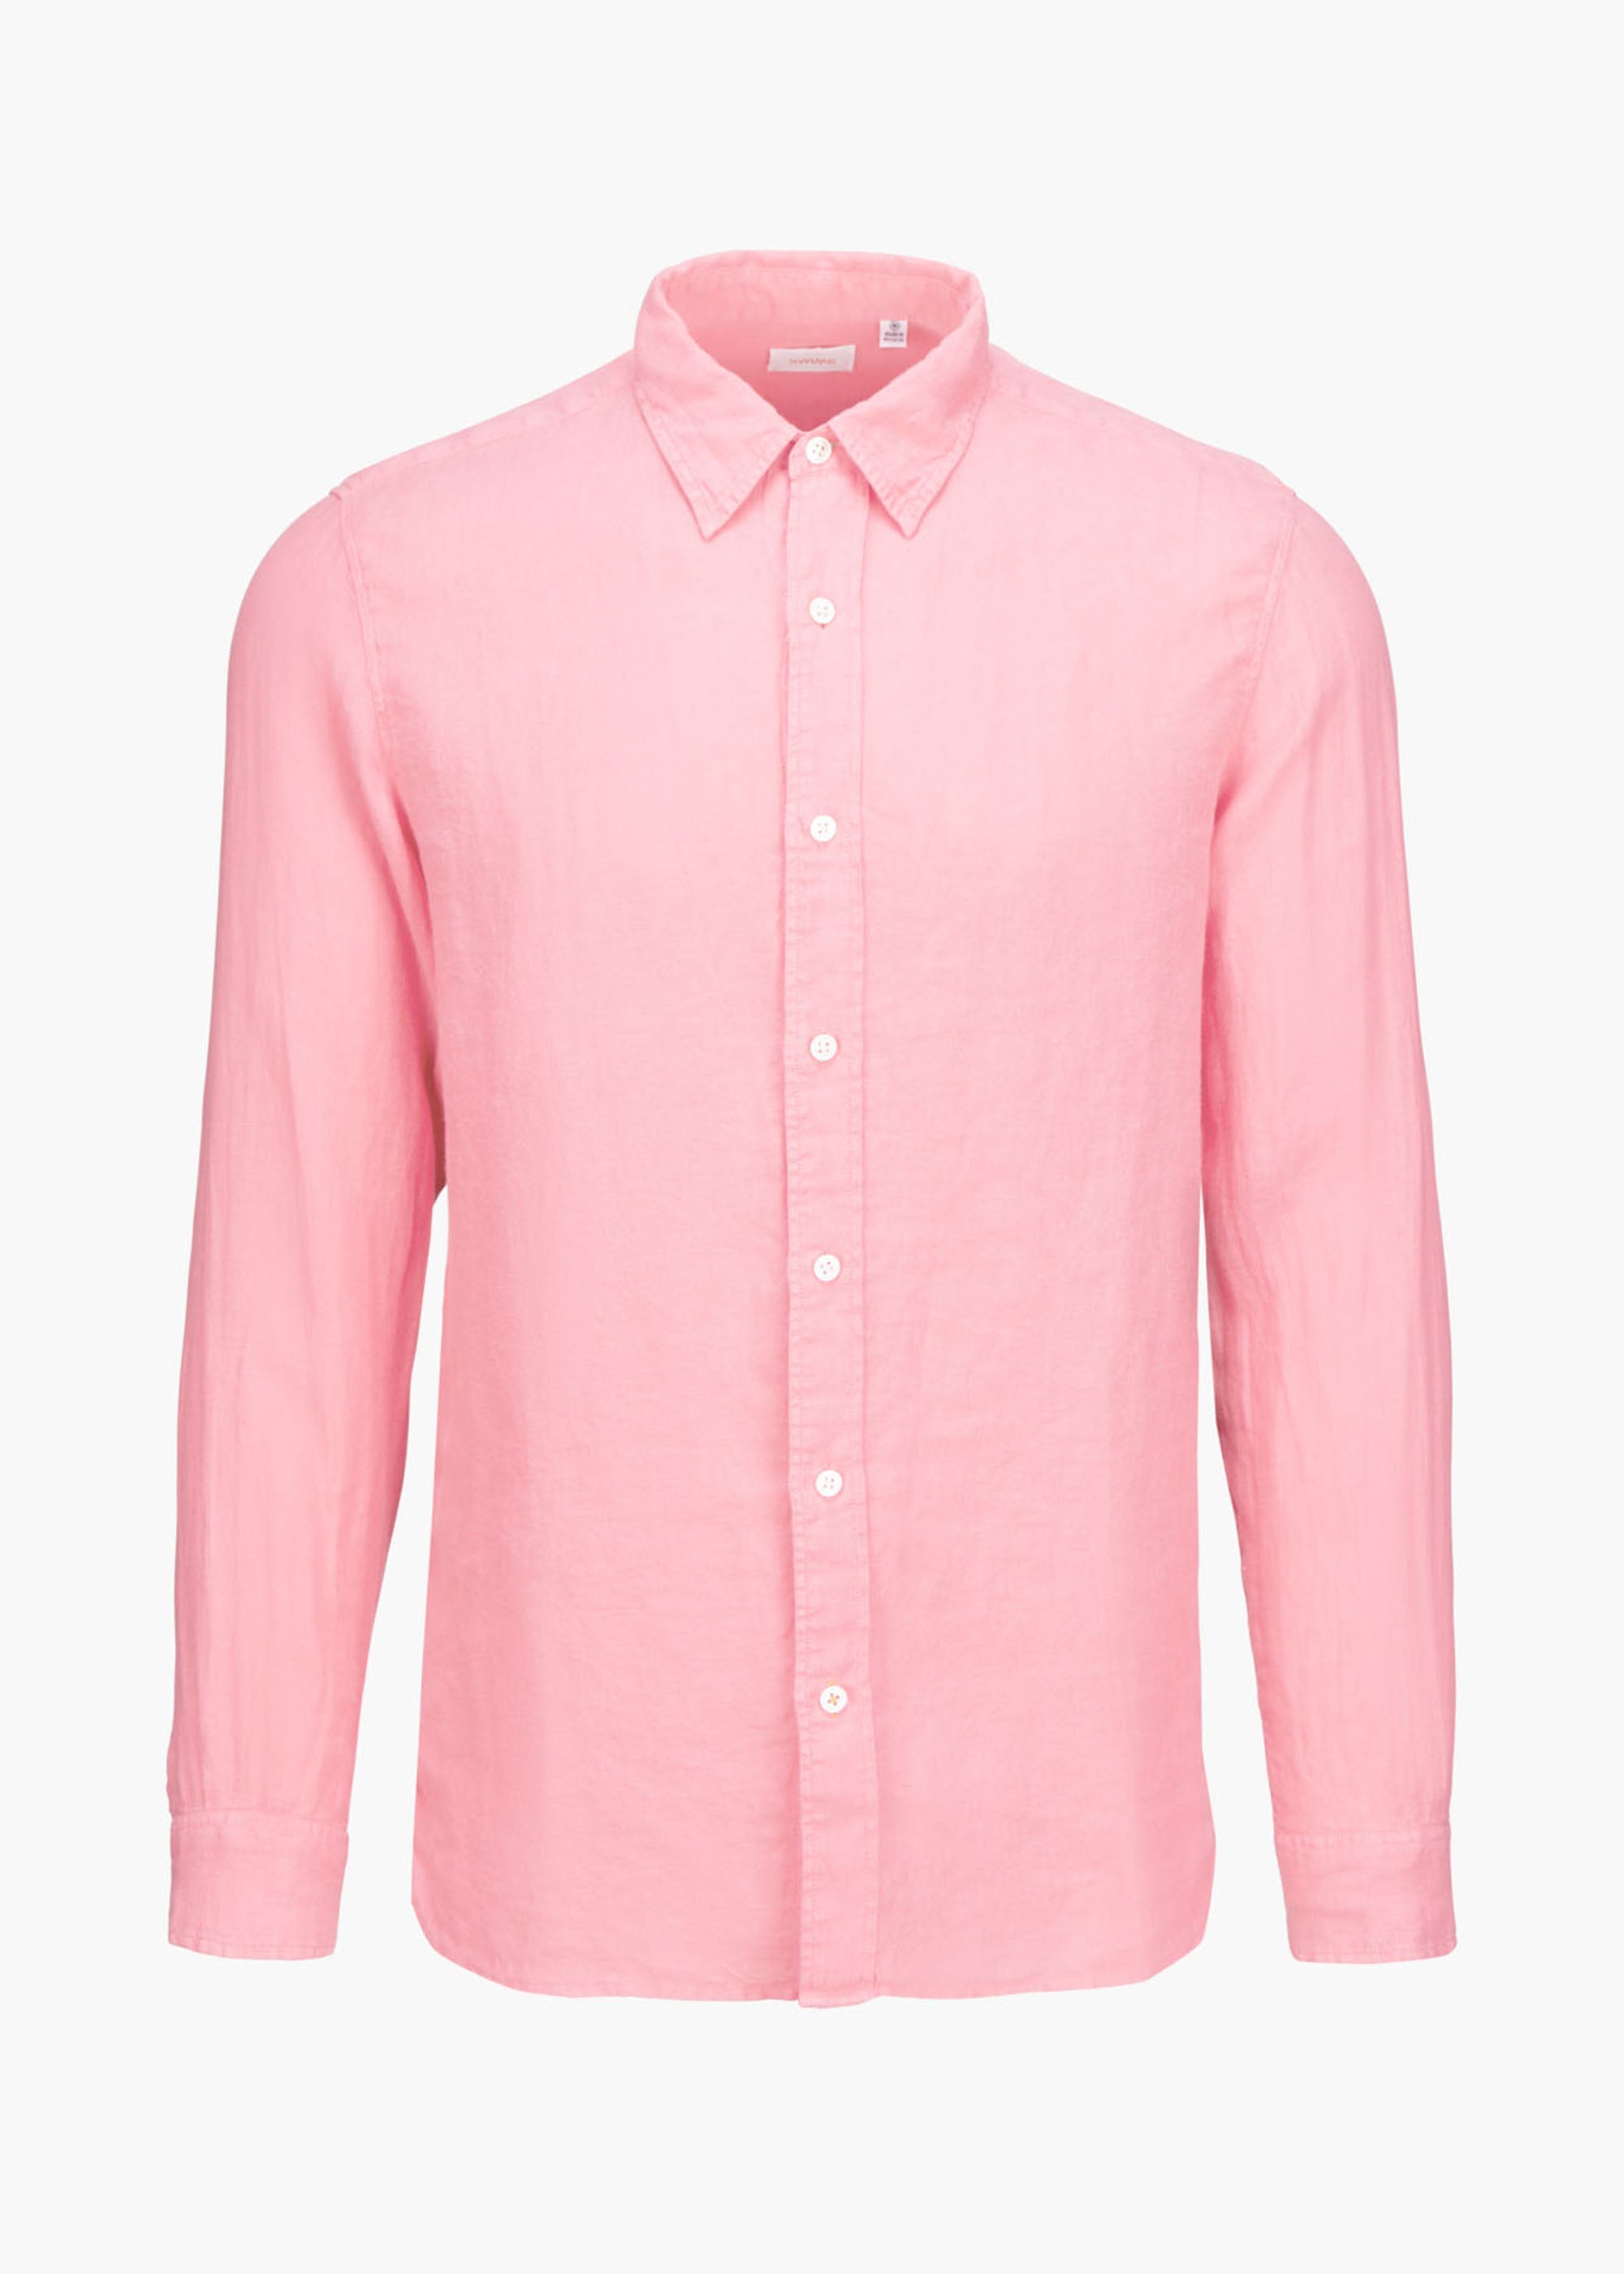 Amalfi Linen Shirt - background::white,variant::Blush Pink